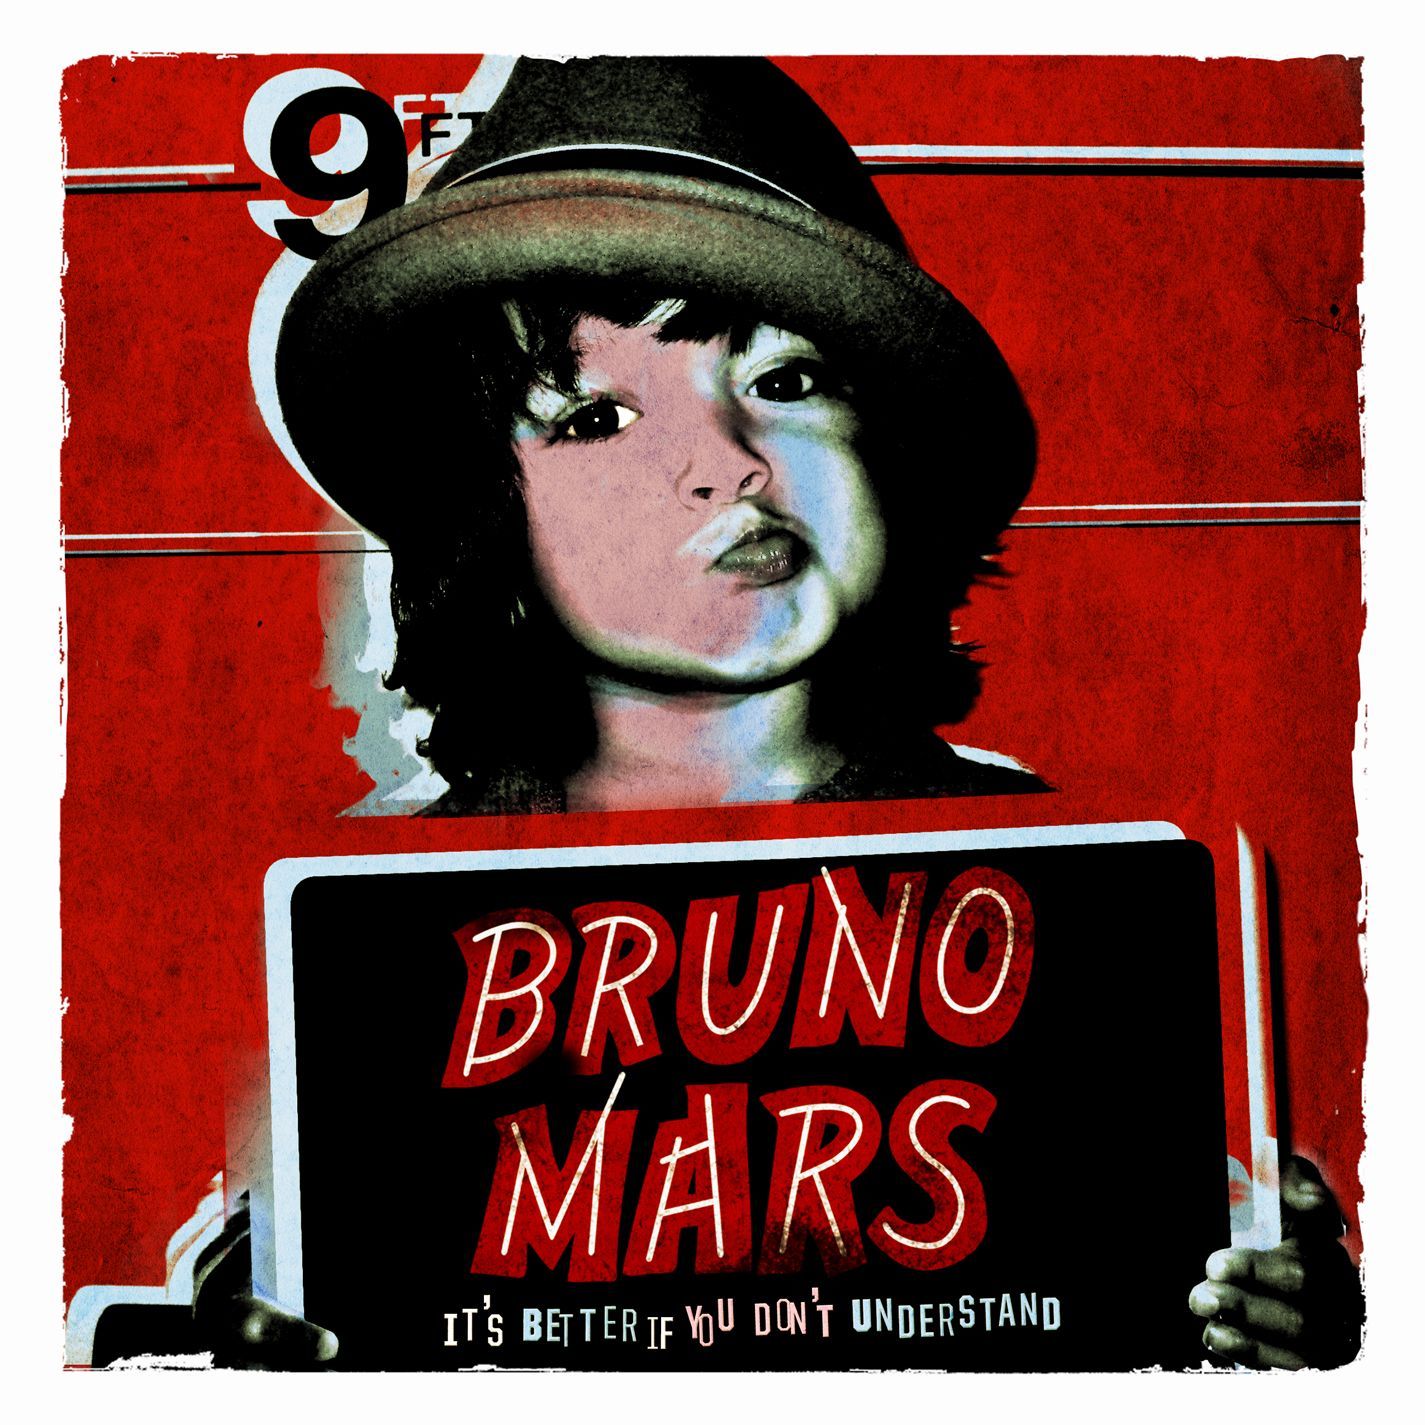 Cifra Club - JUST The WAY YOU ARE - Bruno Mars (Cifra Com Vídeo